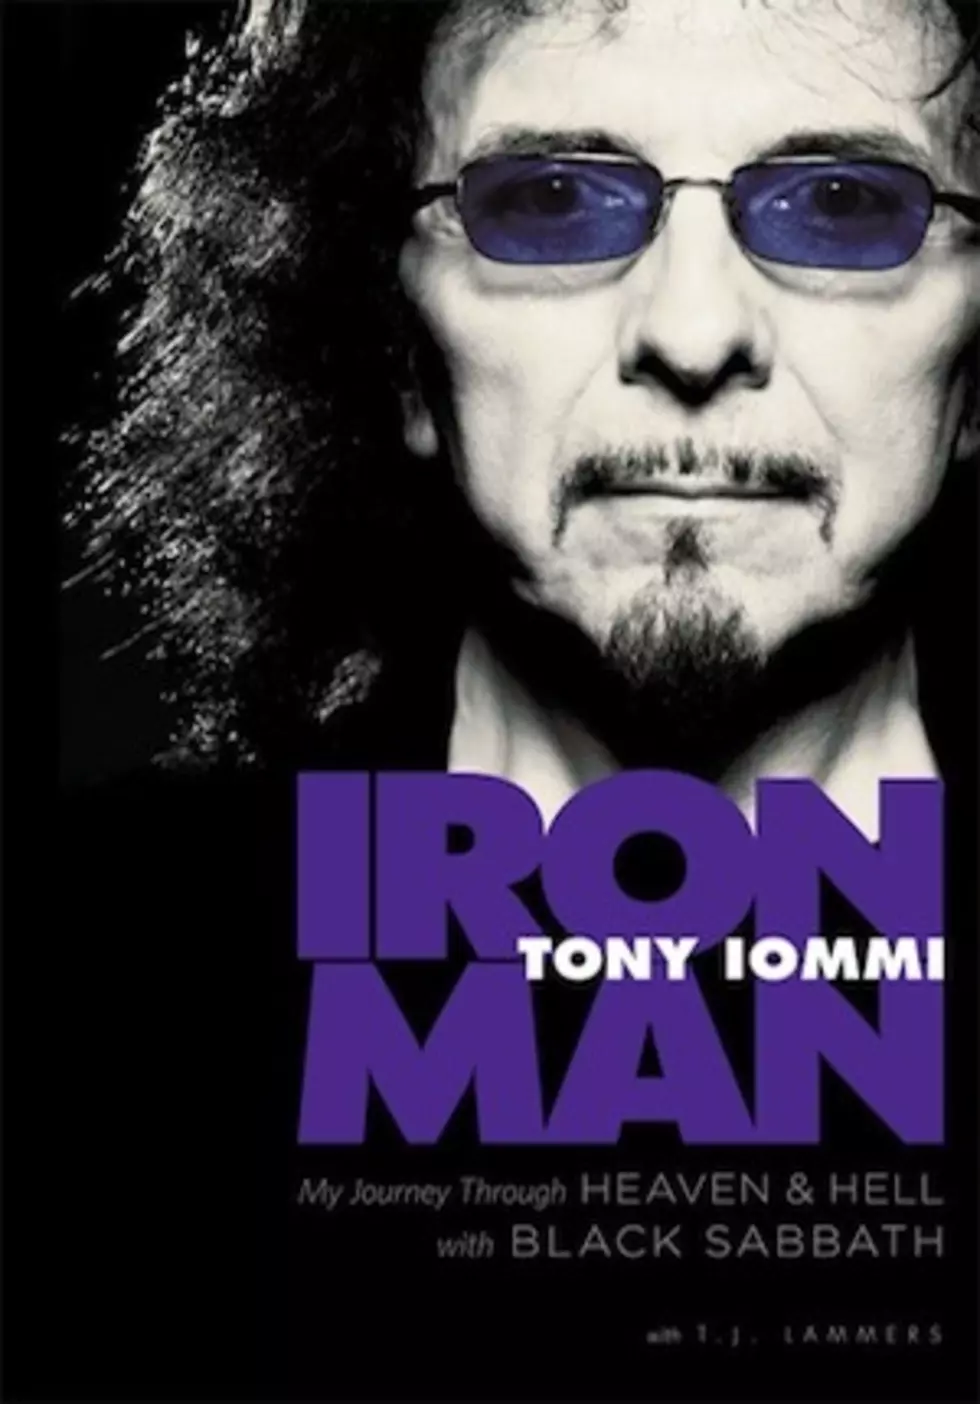 Former Black Sabbath Drummer Bev Bevan Voices Audiobook For Tony Iommi Autobiography